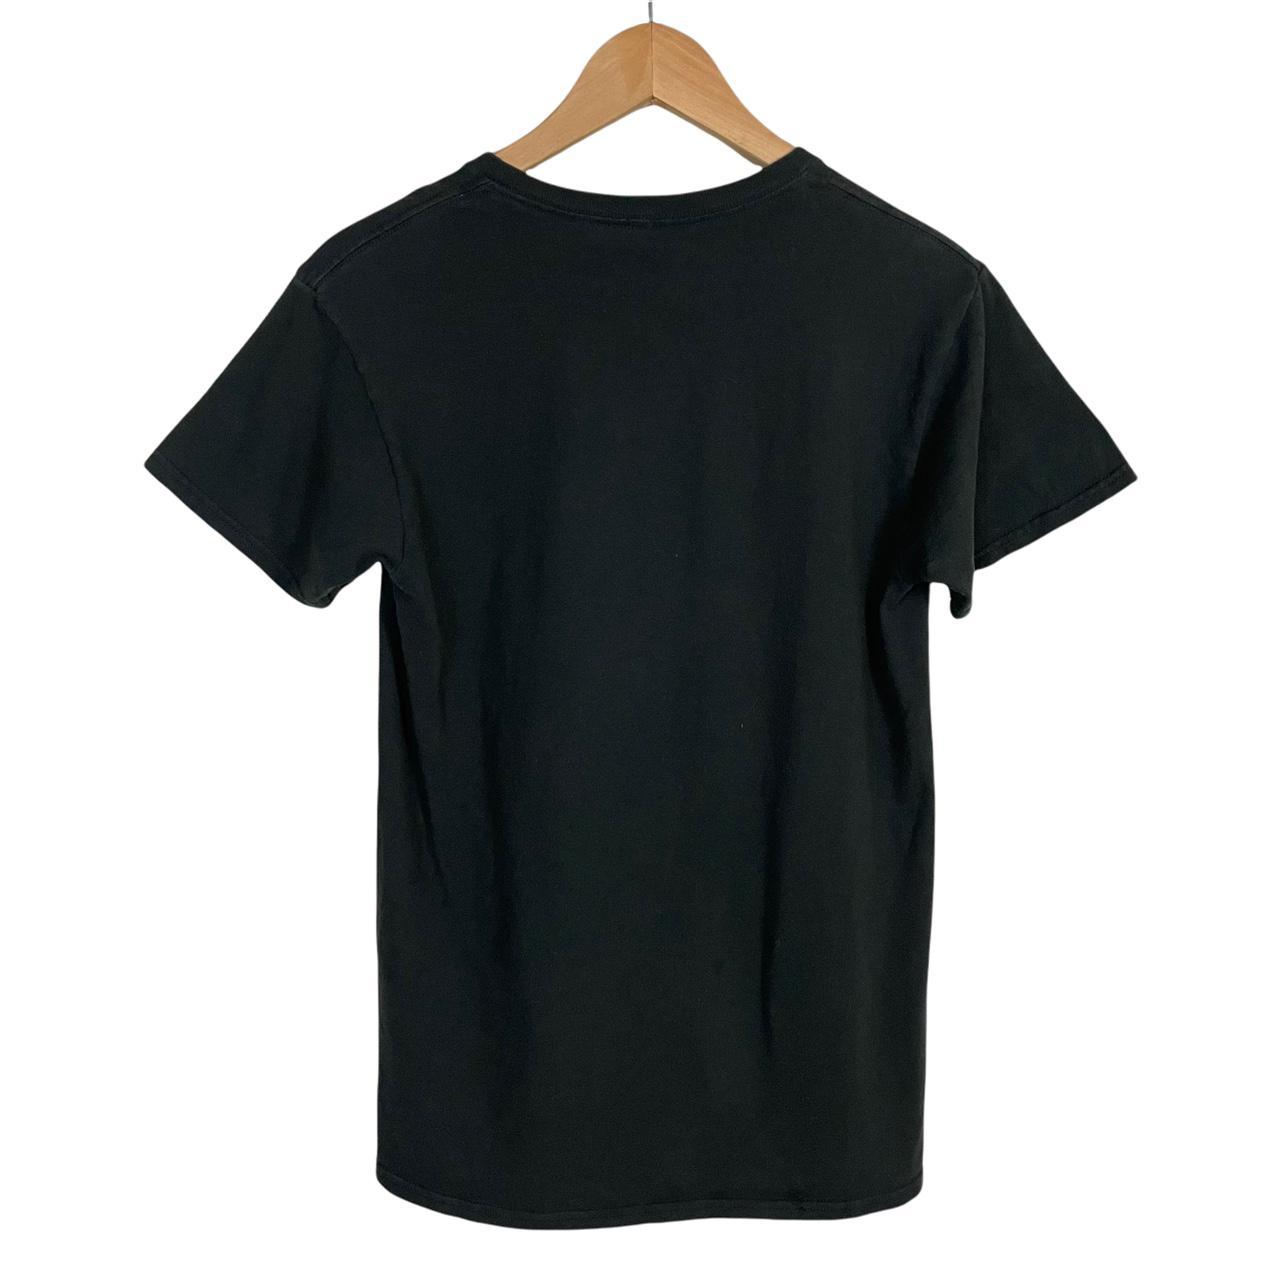 Product Image 3 - Fortnite Jackpot Loot Llama T-Shirt
•